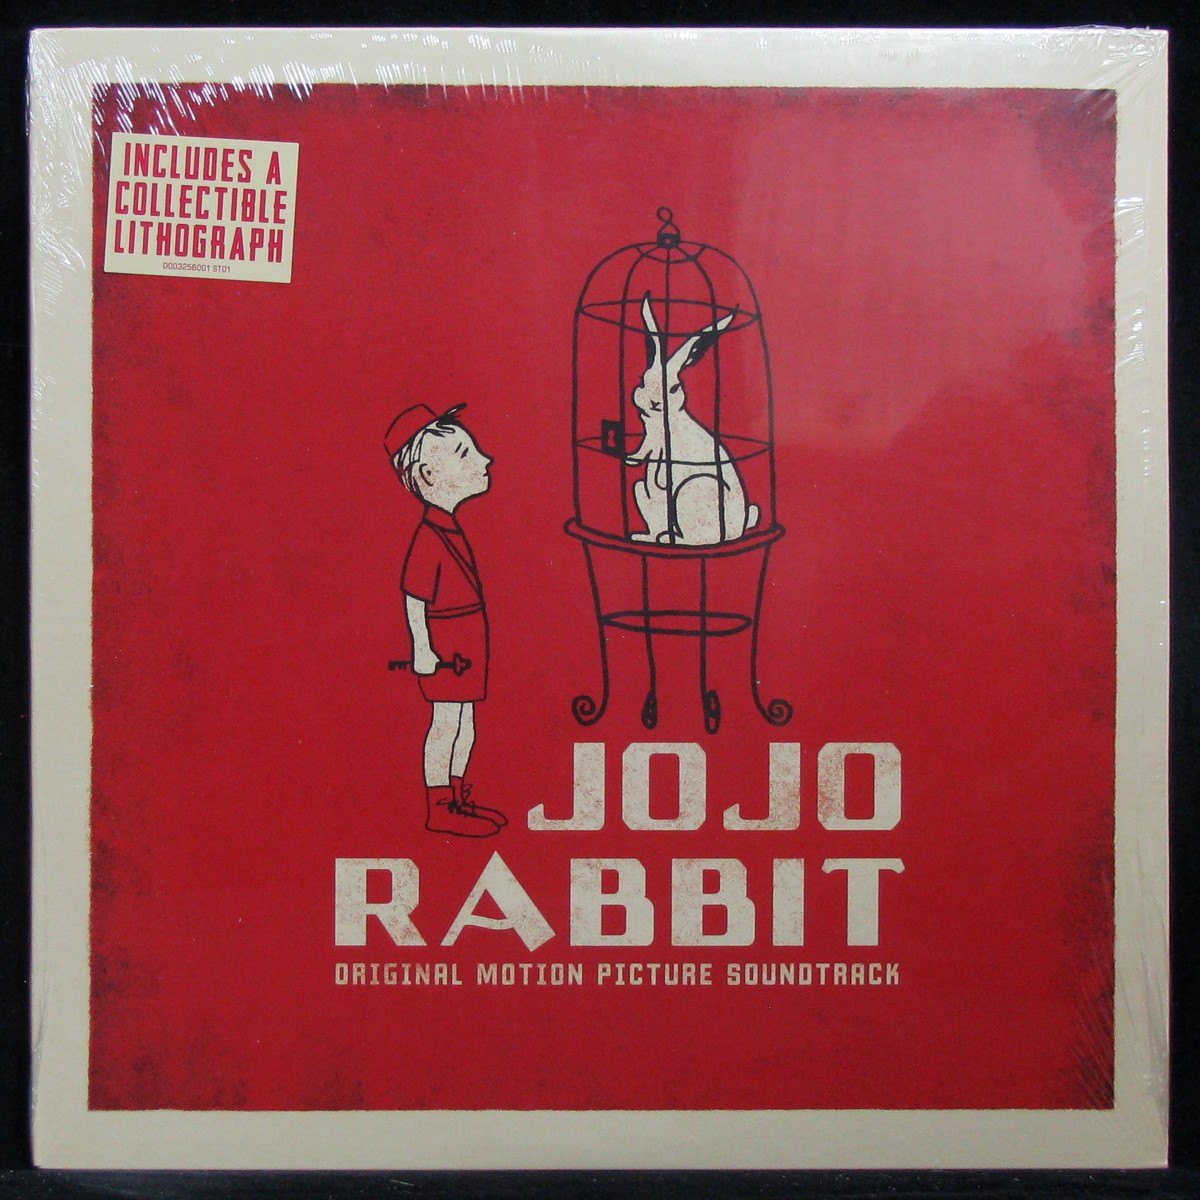 Jojo Rabbit (Original Motion Picture Soundtrack)